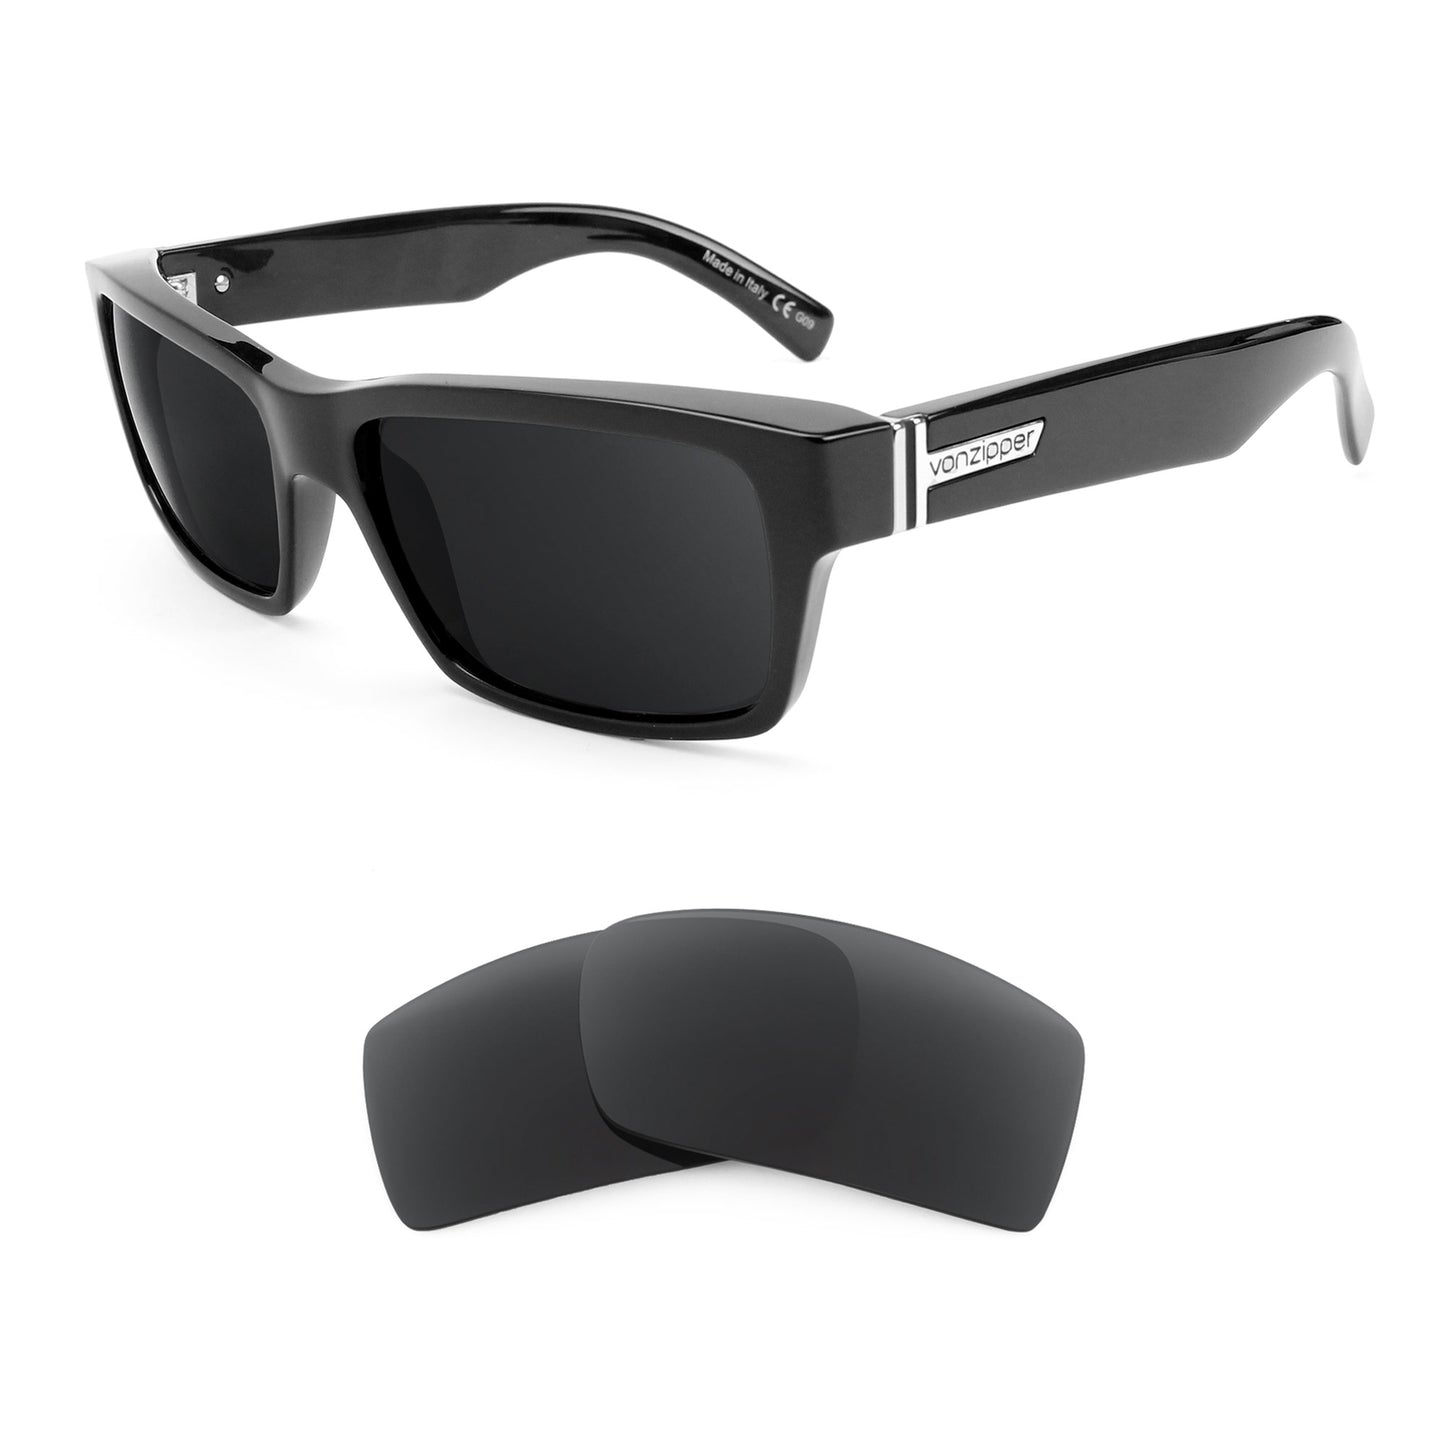 VonZipper Fulton sunglasses with replacement lenses